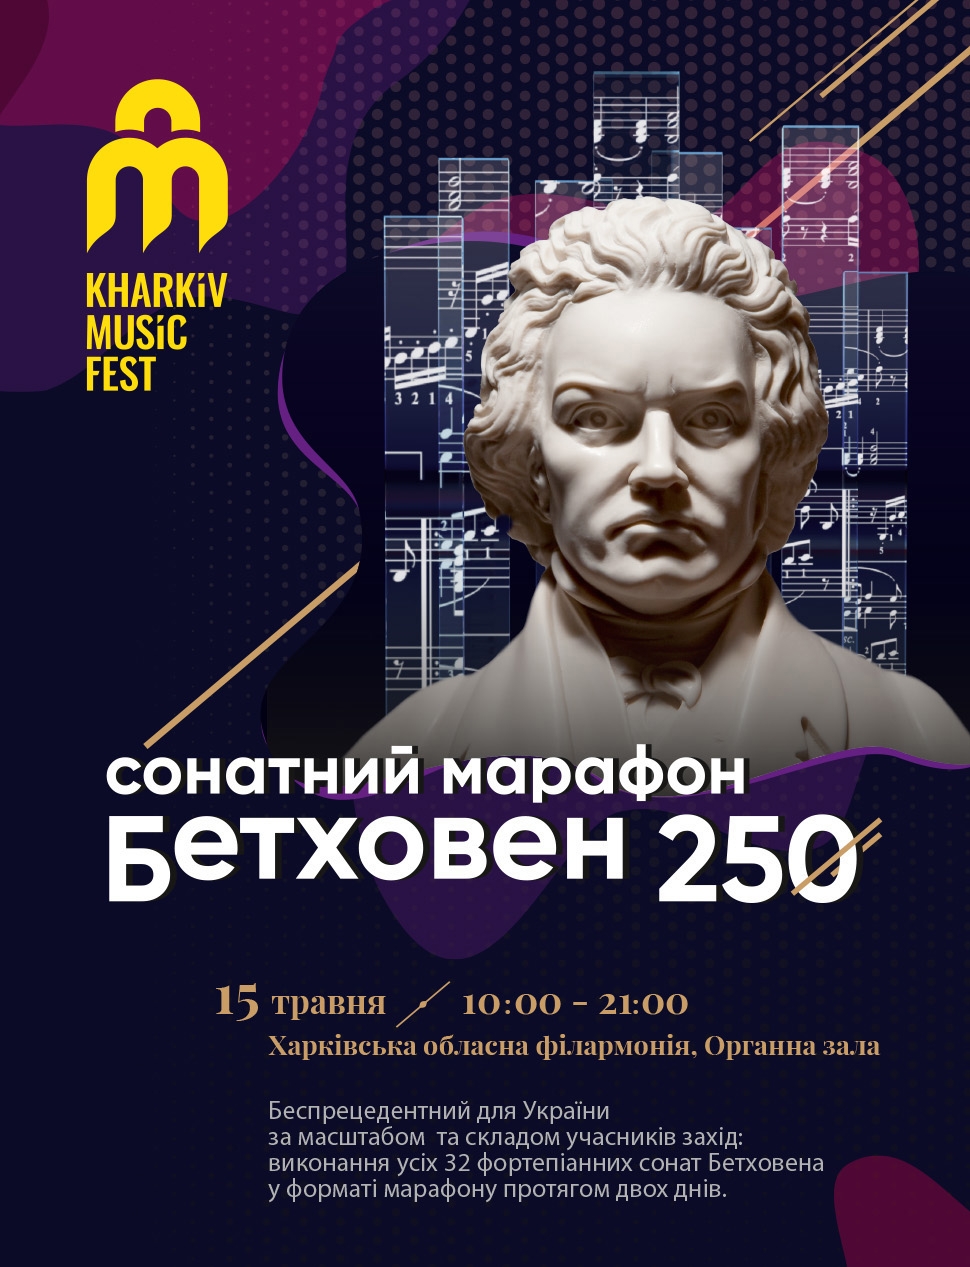 KharkivMusicFest. Сонатный марафон "Бетховен 250" (перенос): фото 1